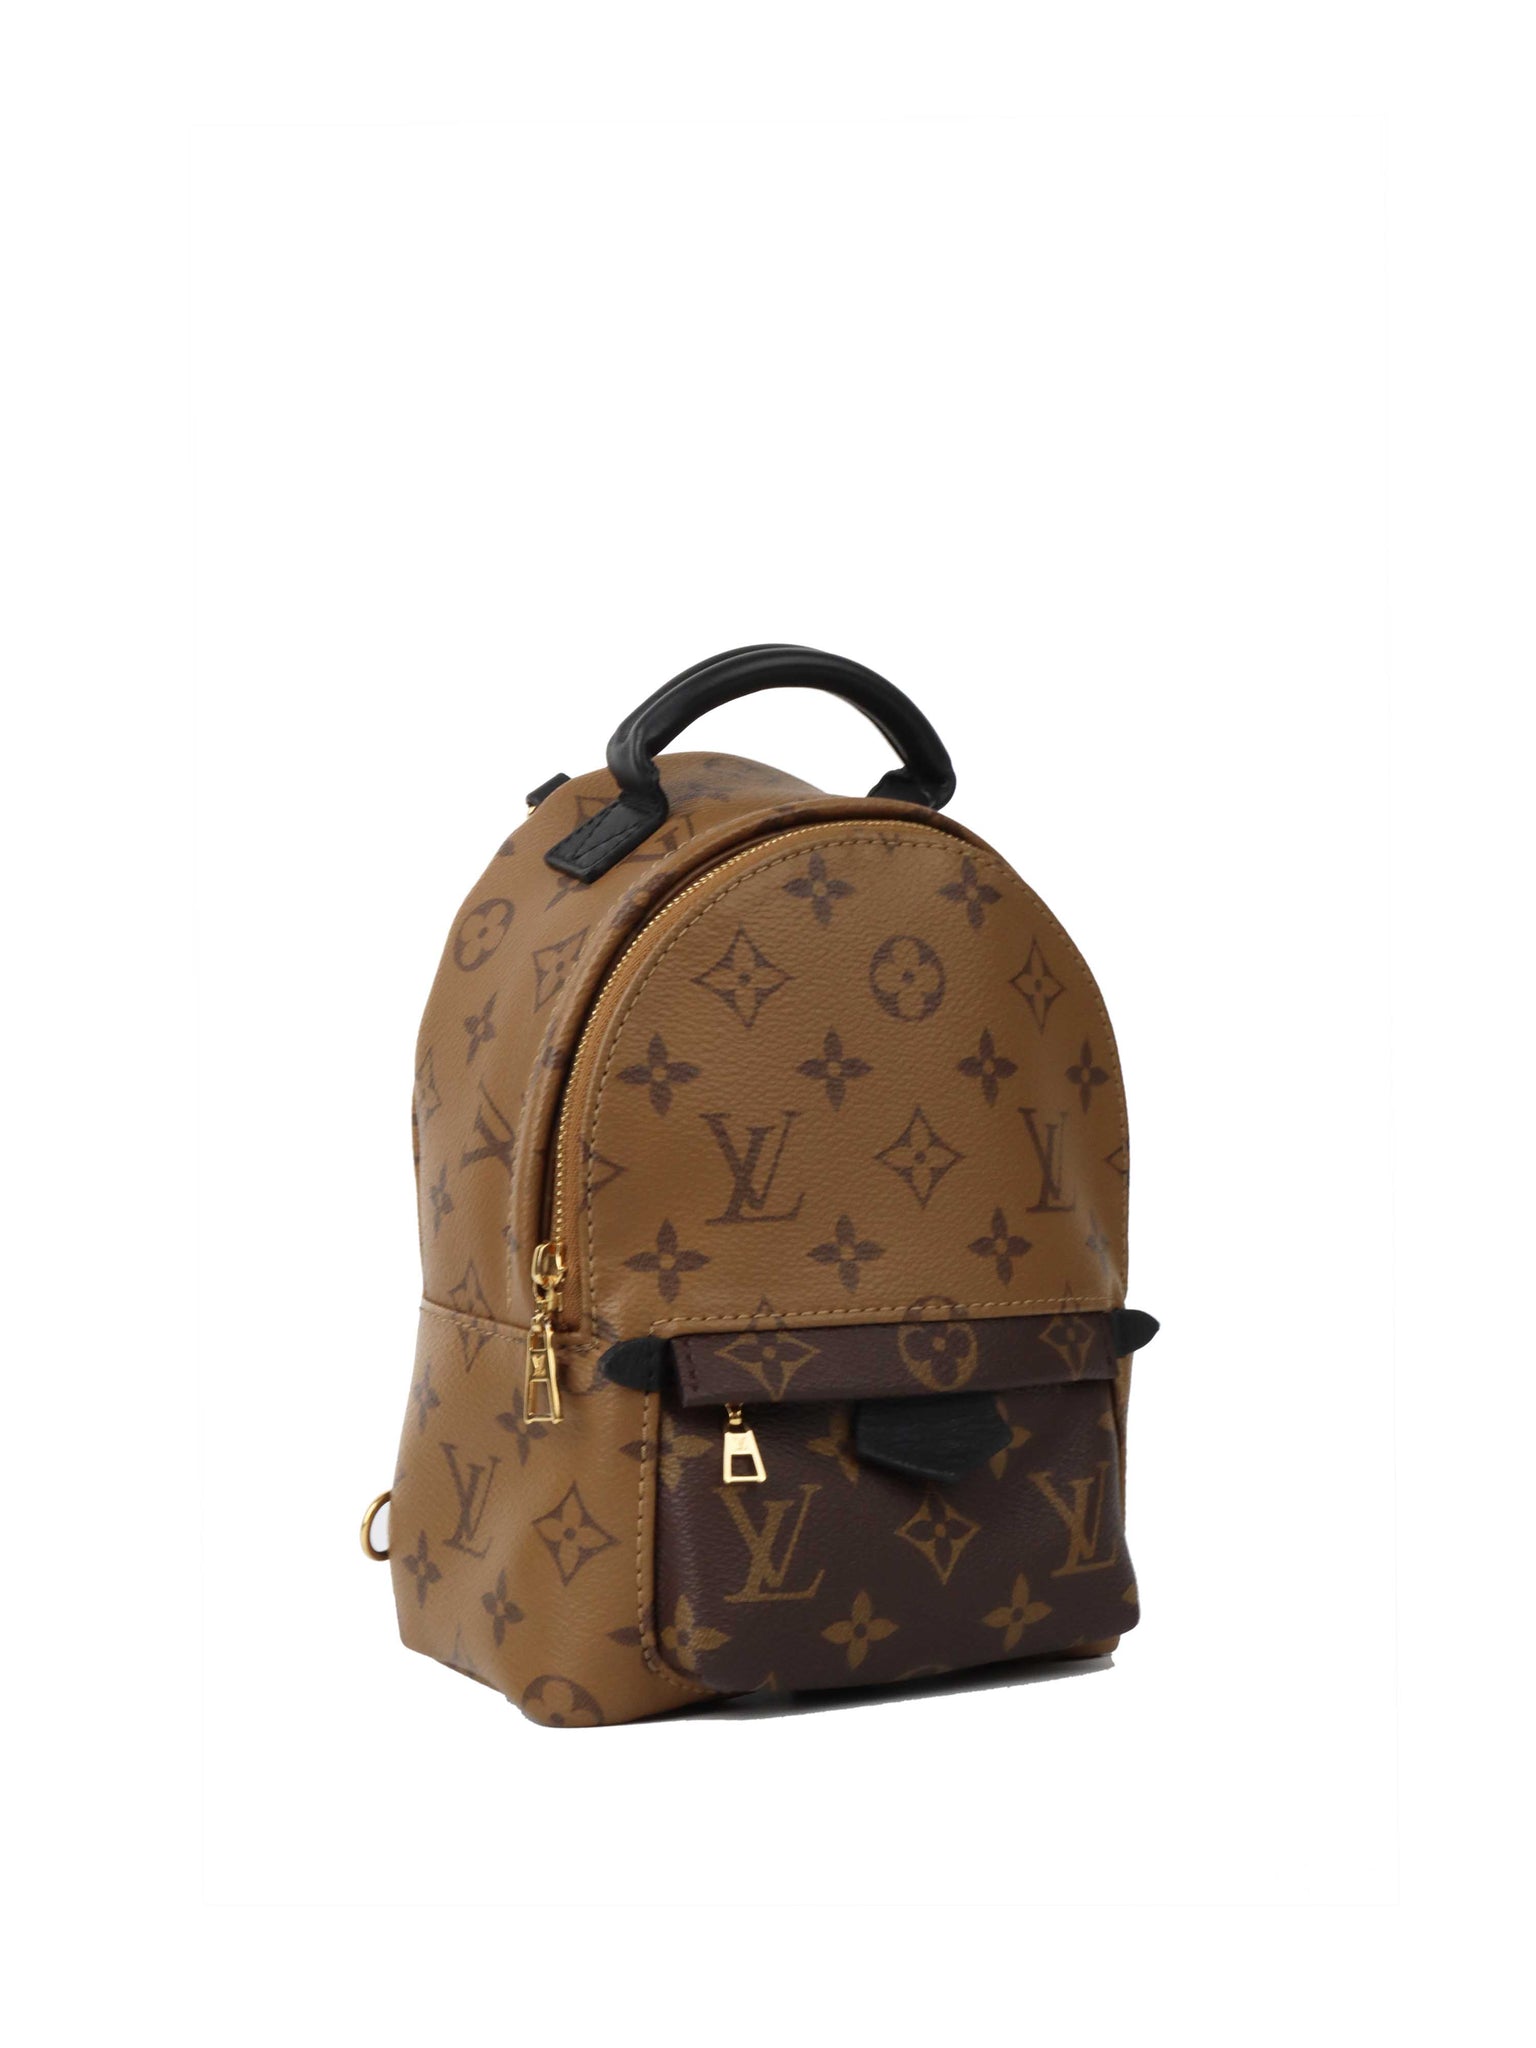 Louis Vuitton Palm Springs Mini Backpack - The Shoe Box